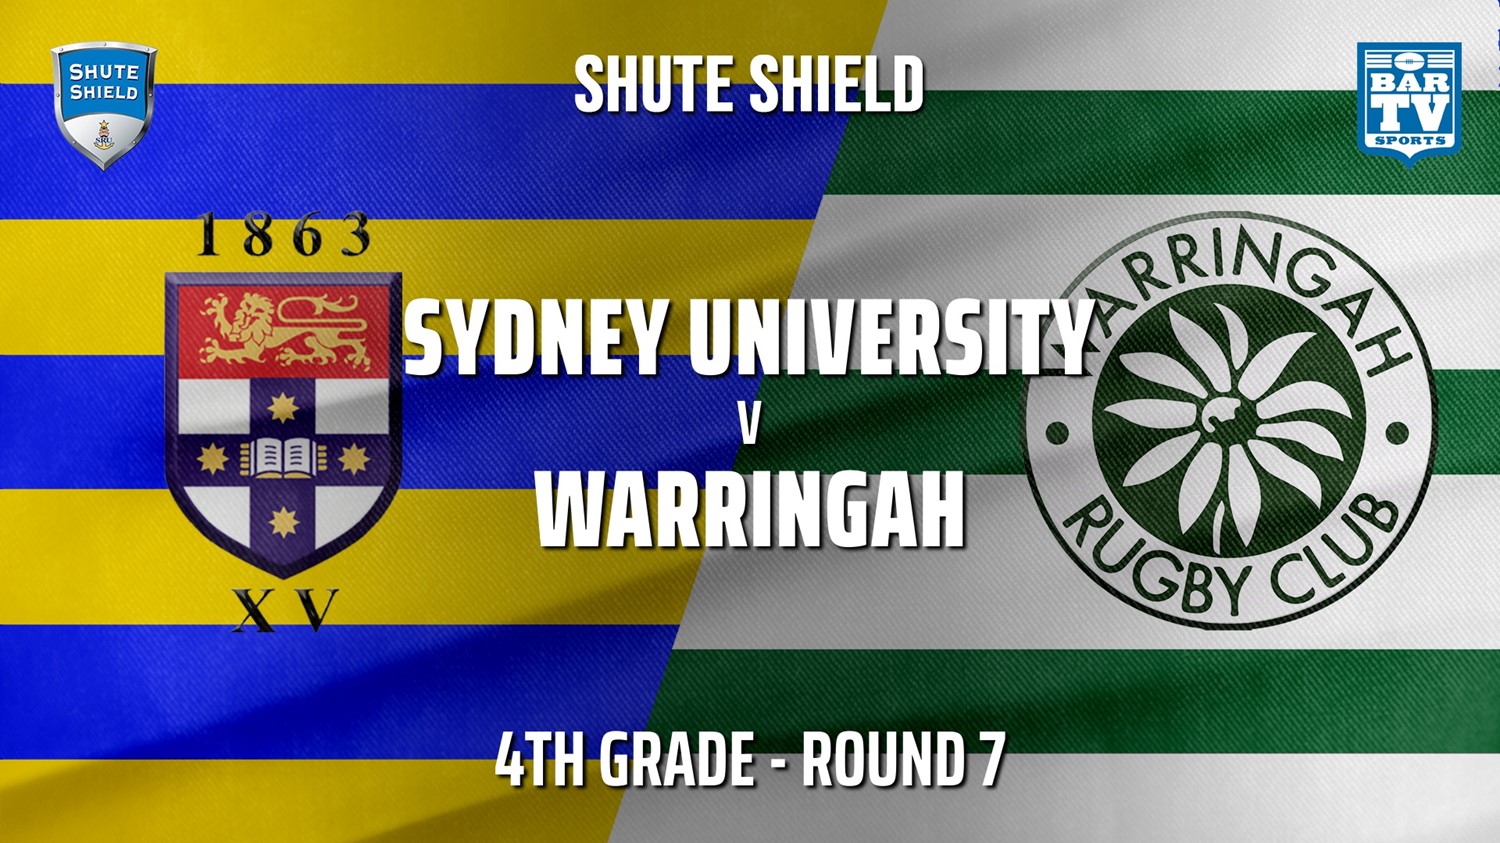 210522-Shute Shield Round 7 - 4th Grade - Sydney University v Warringah Slate Image